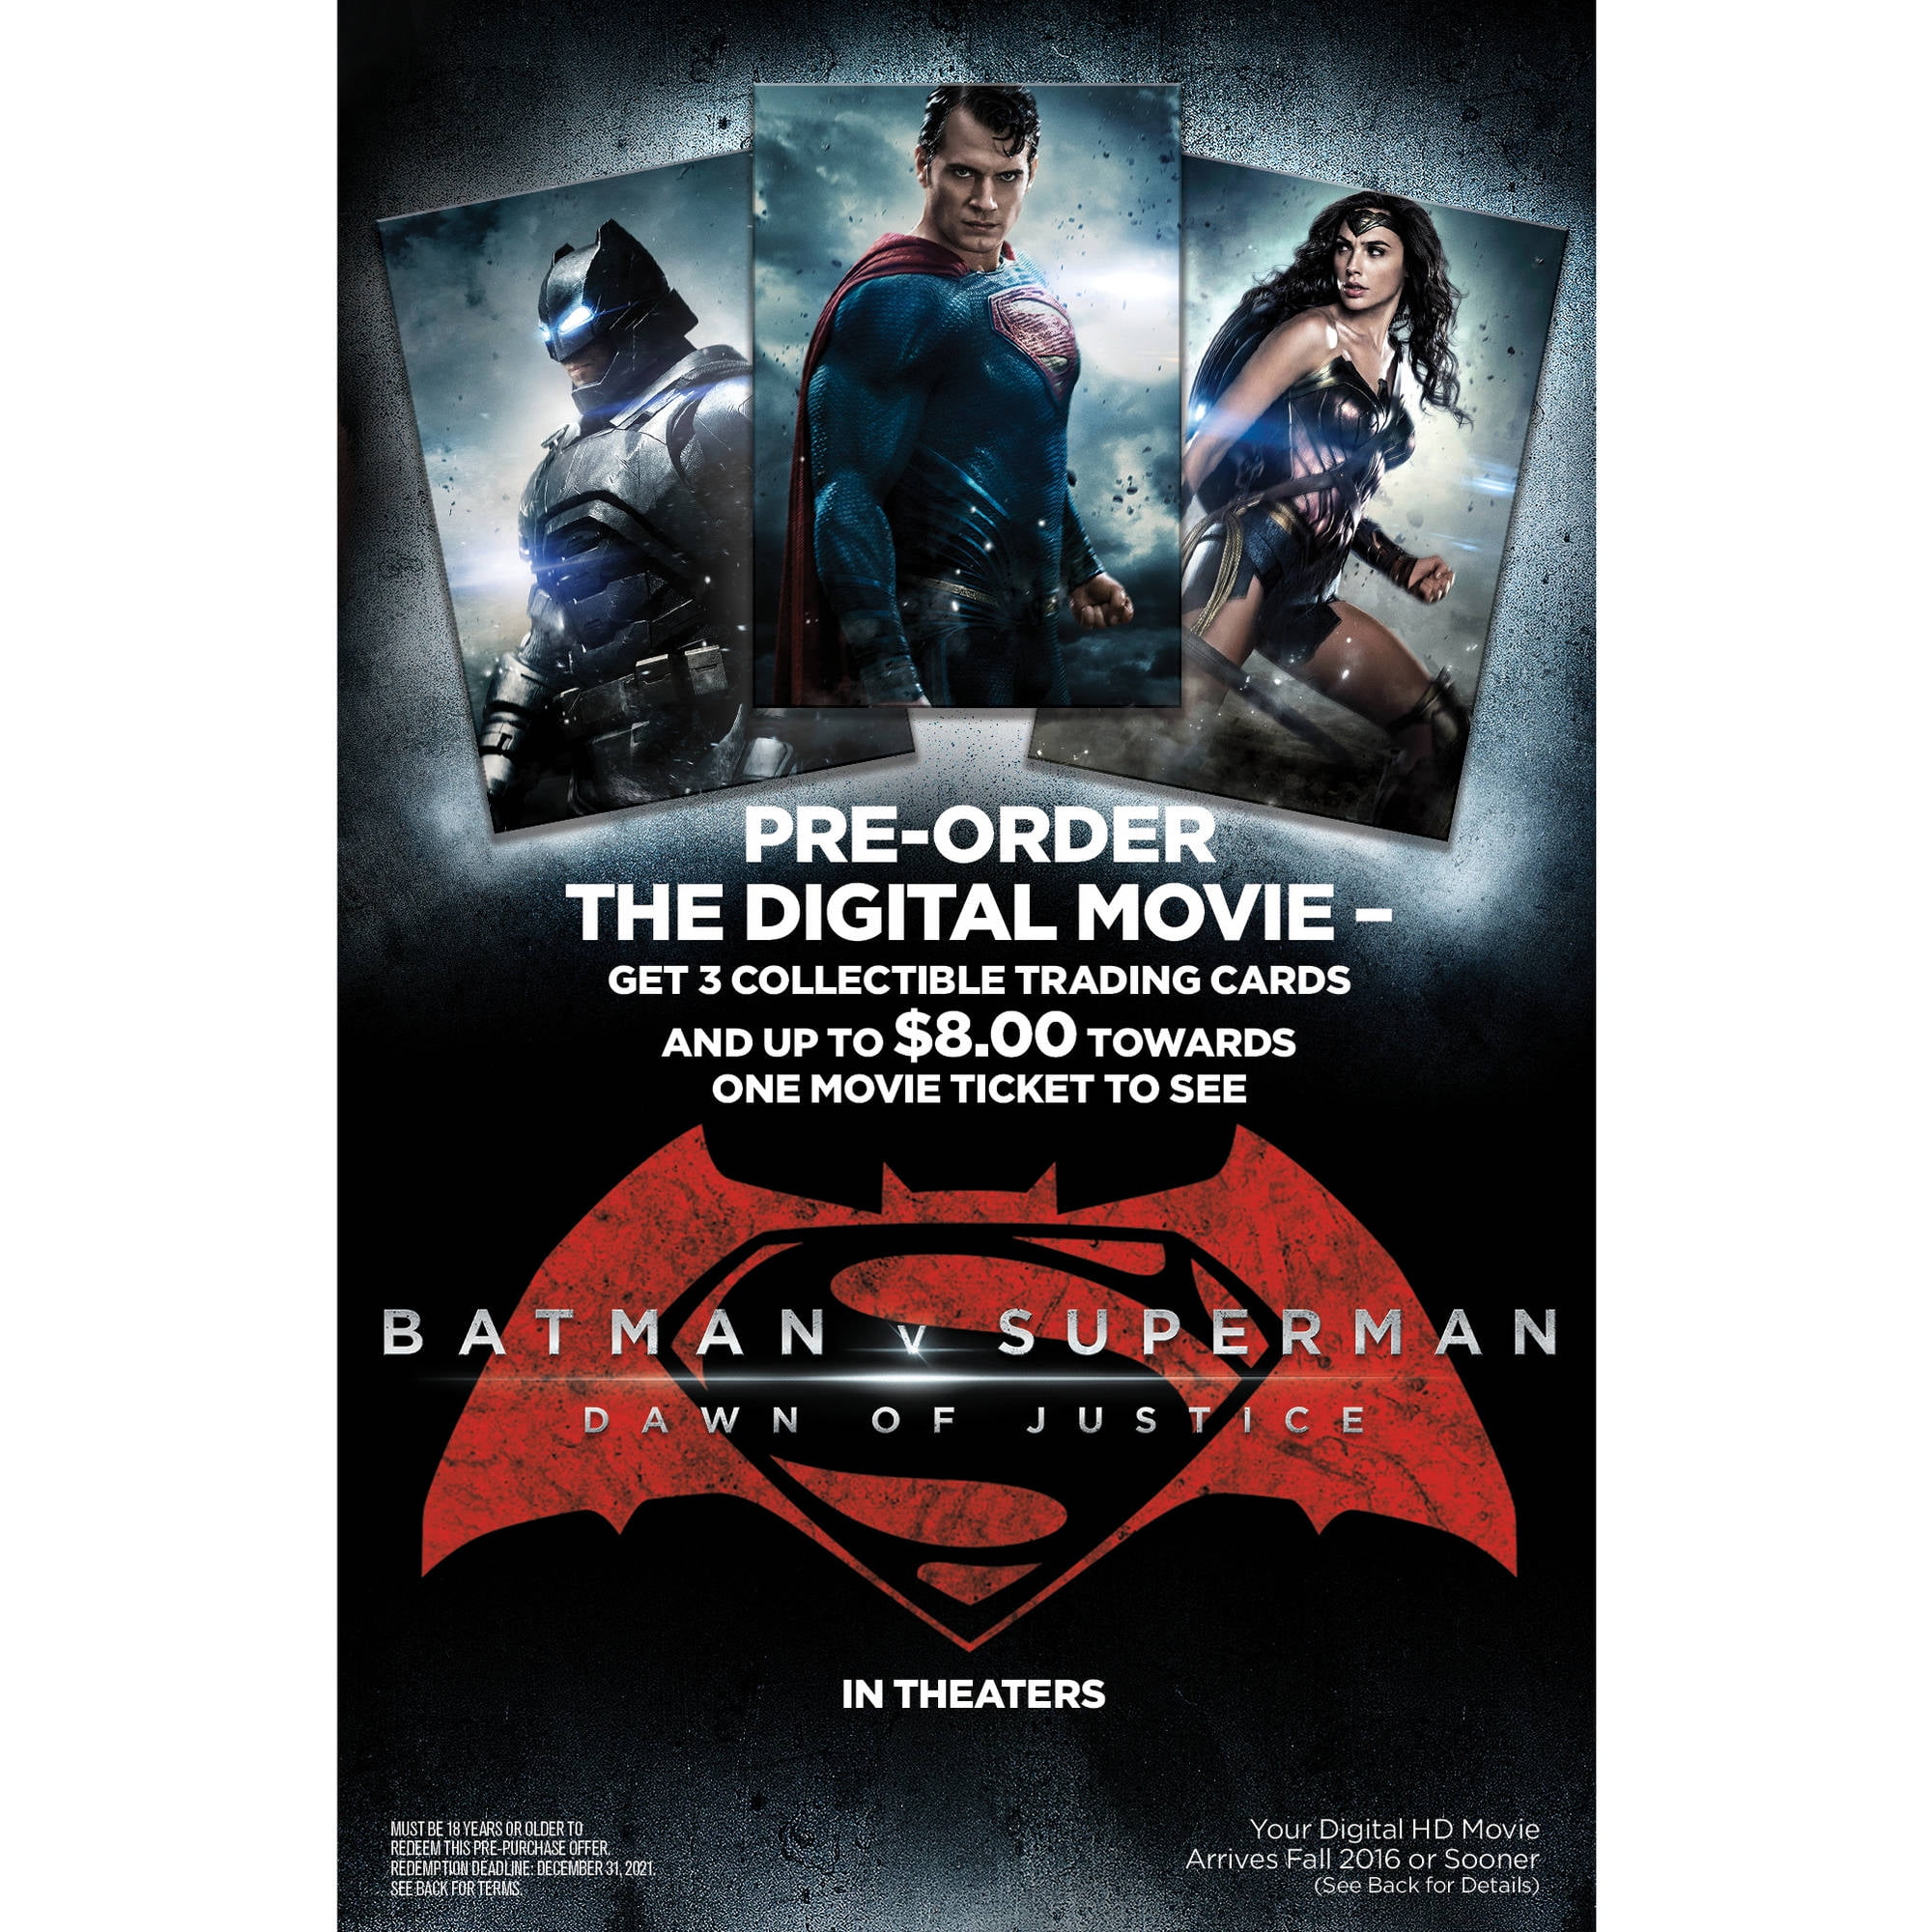 Batman vs Superman Dawn of Justice HQ Movie Wallpapers